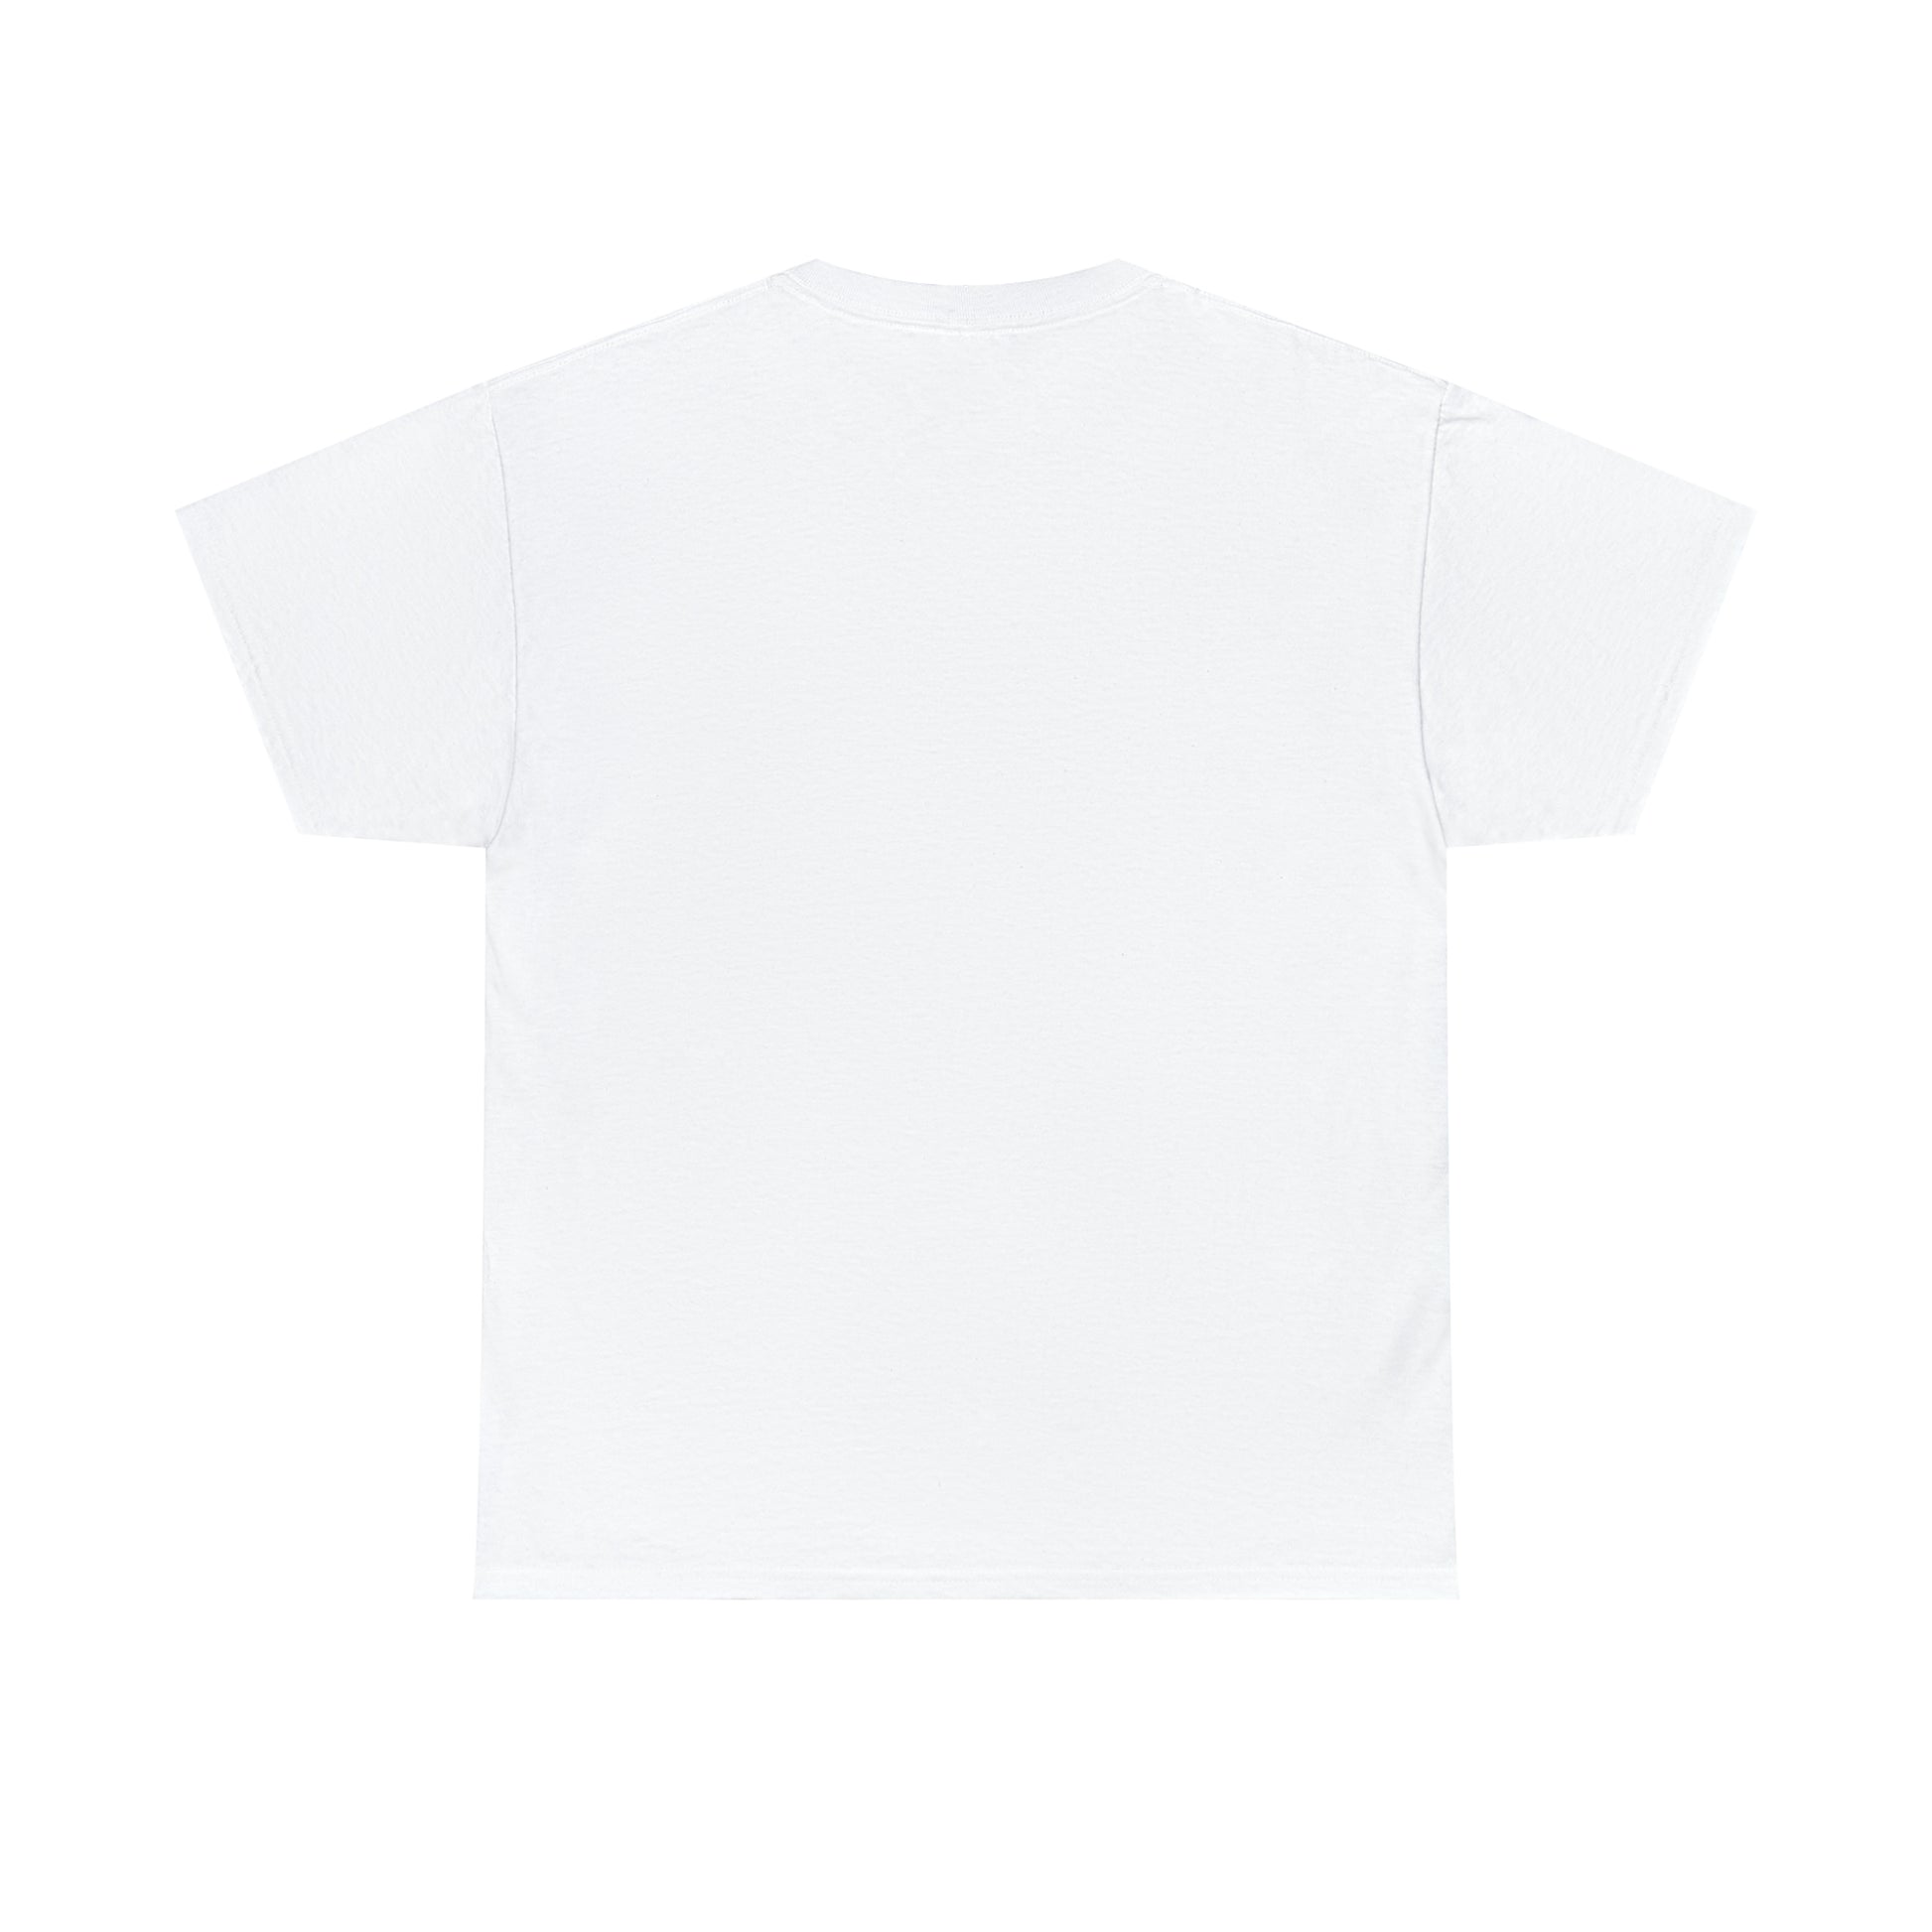 black tshirt roblox - Buy black tshirt roblox at Best Price in